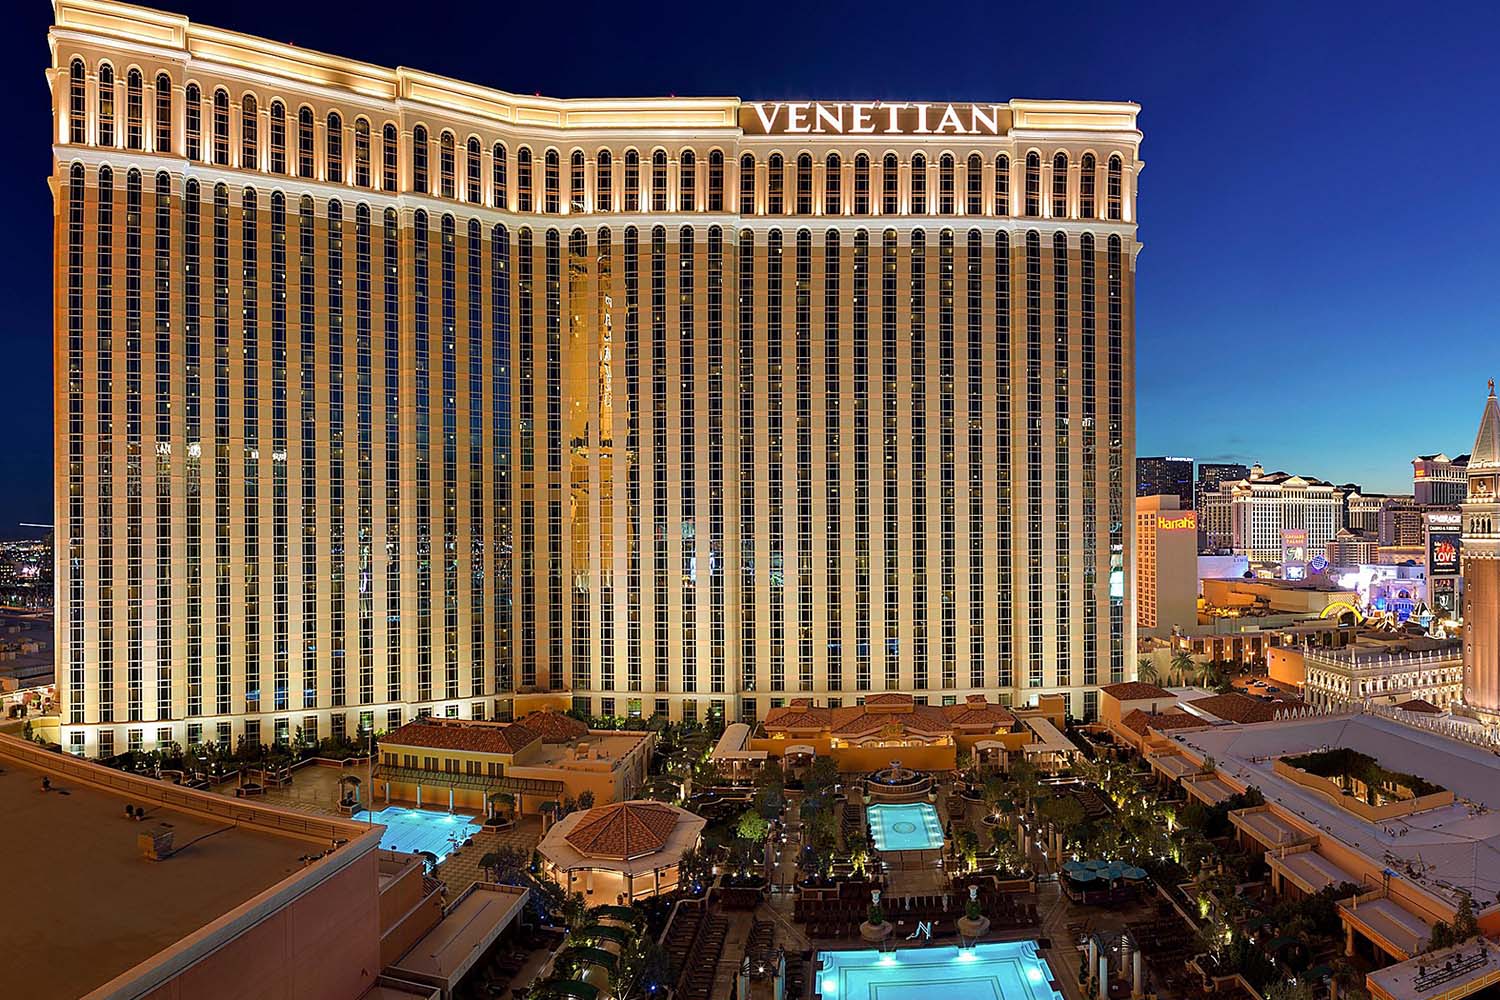 Bellagio Hotel and Casino in Las Vegas - An Elegant Italian-Inspired Casino  Hotel on the Strip - Go Guides